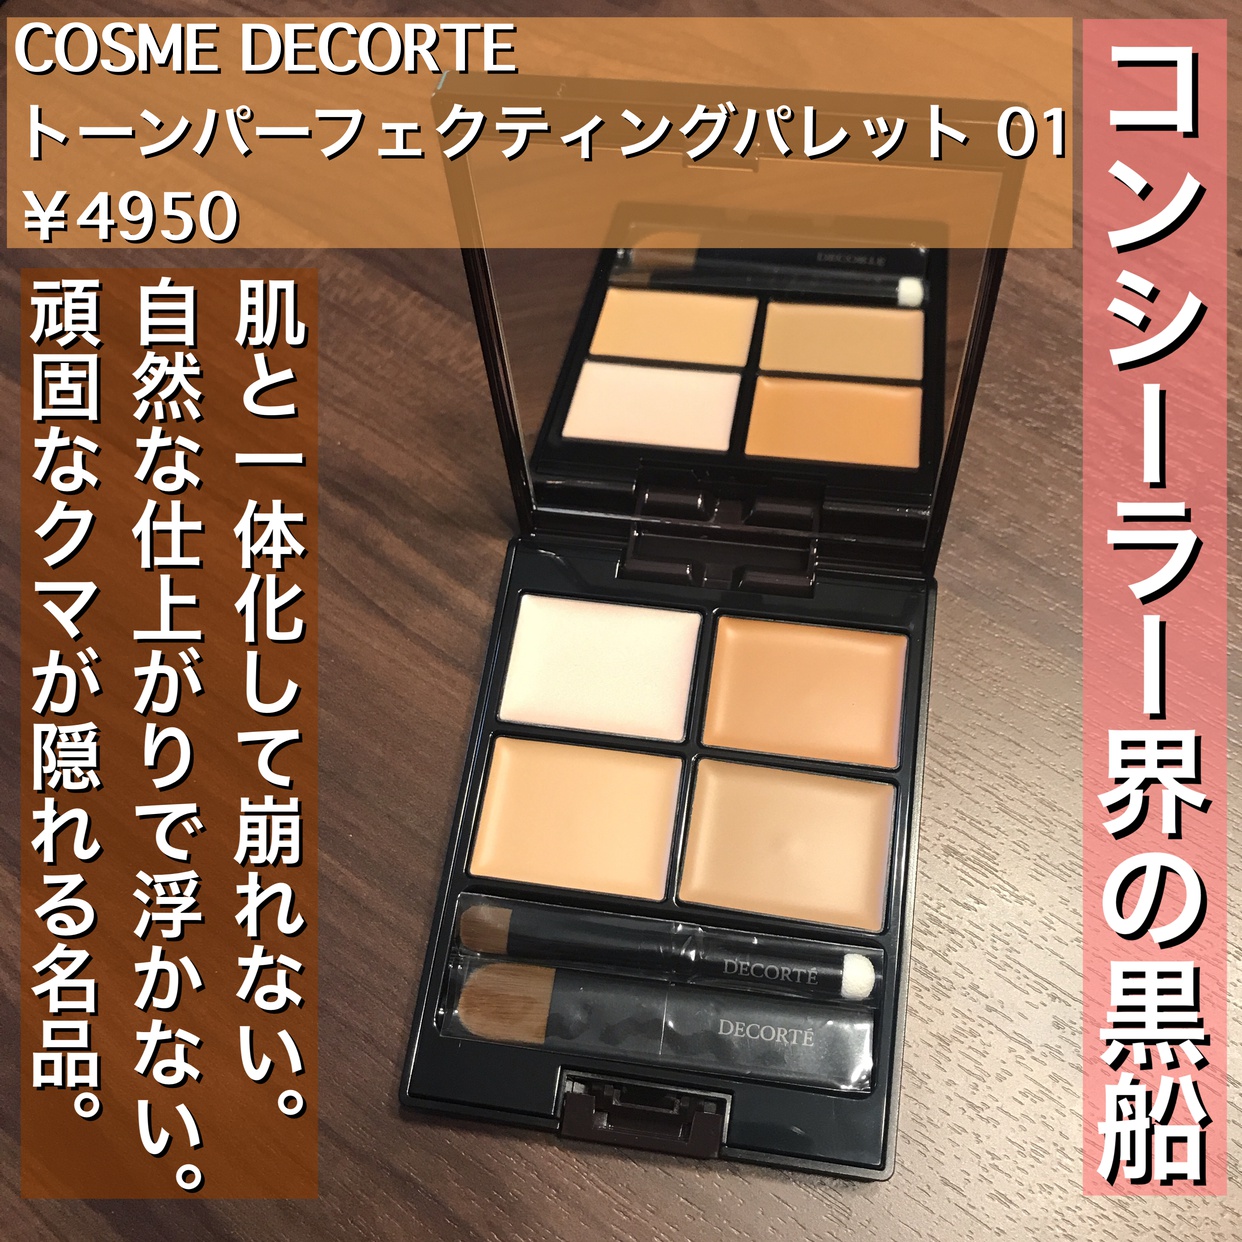 DECORTÉ(コスメデコルテ) トーン パーフェクティング パレットを使ったyuuuri_cosmeさんのクチコミ画像1